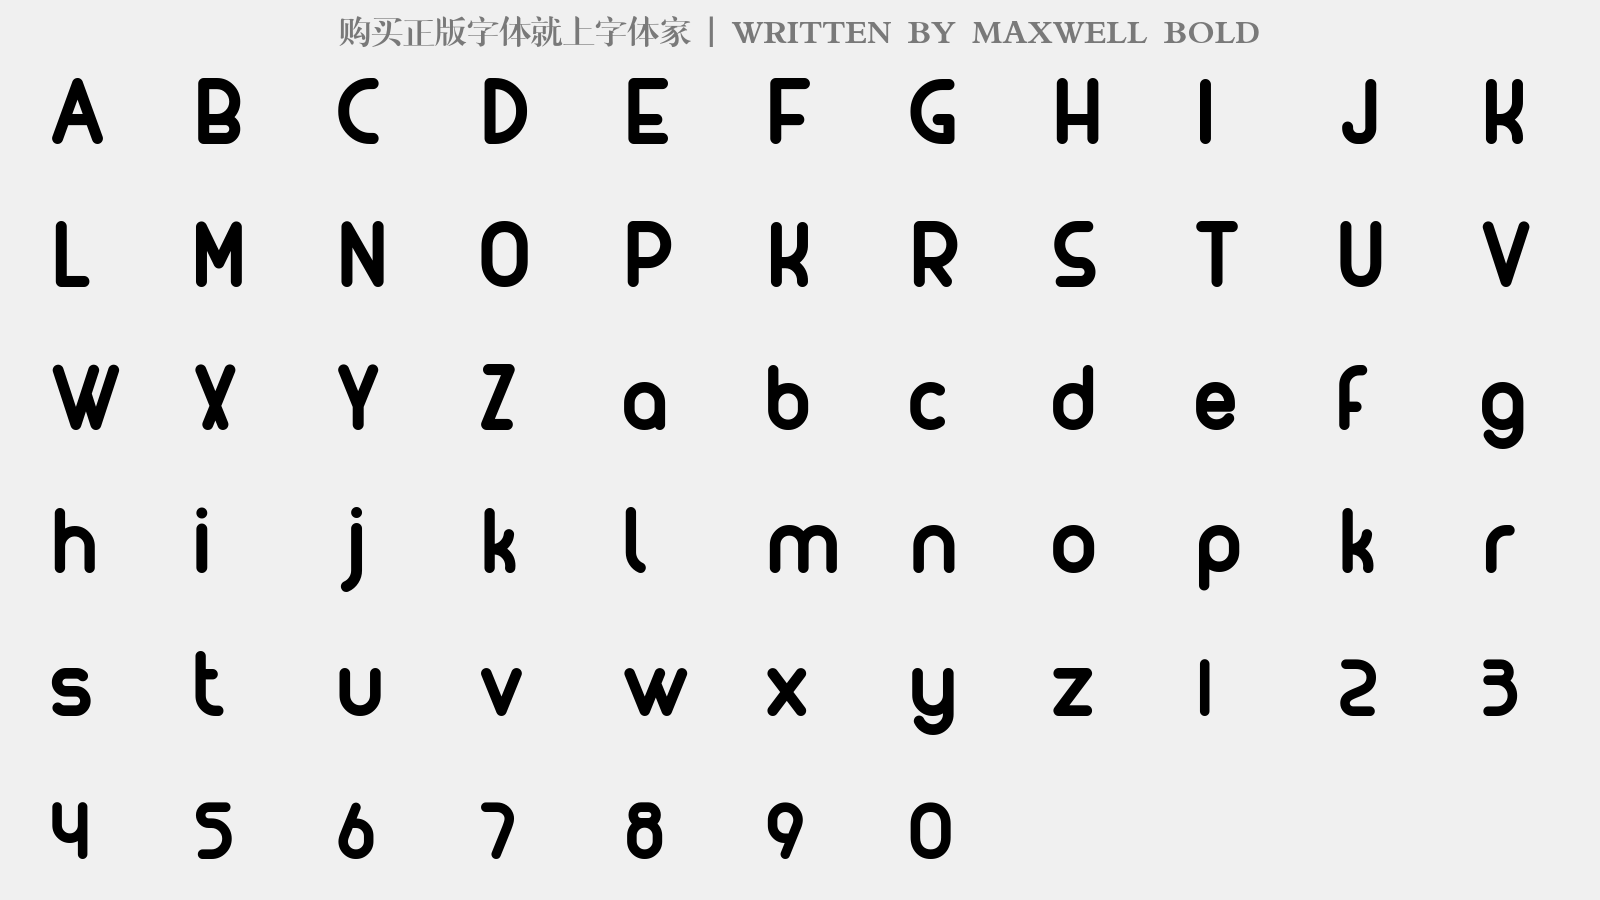 MAXWELL BOLD - 大写字母/小写字母/数字